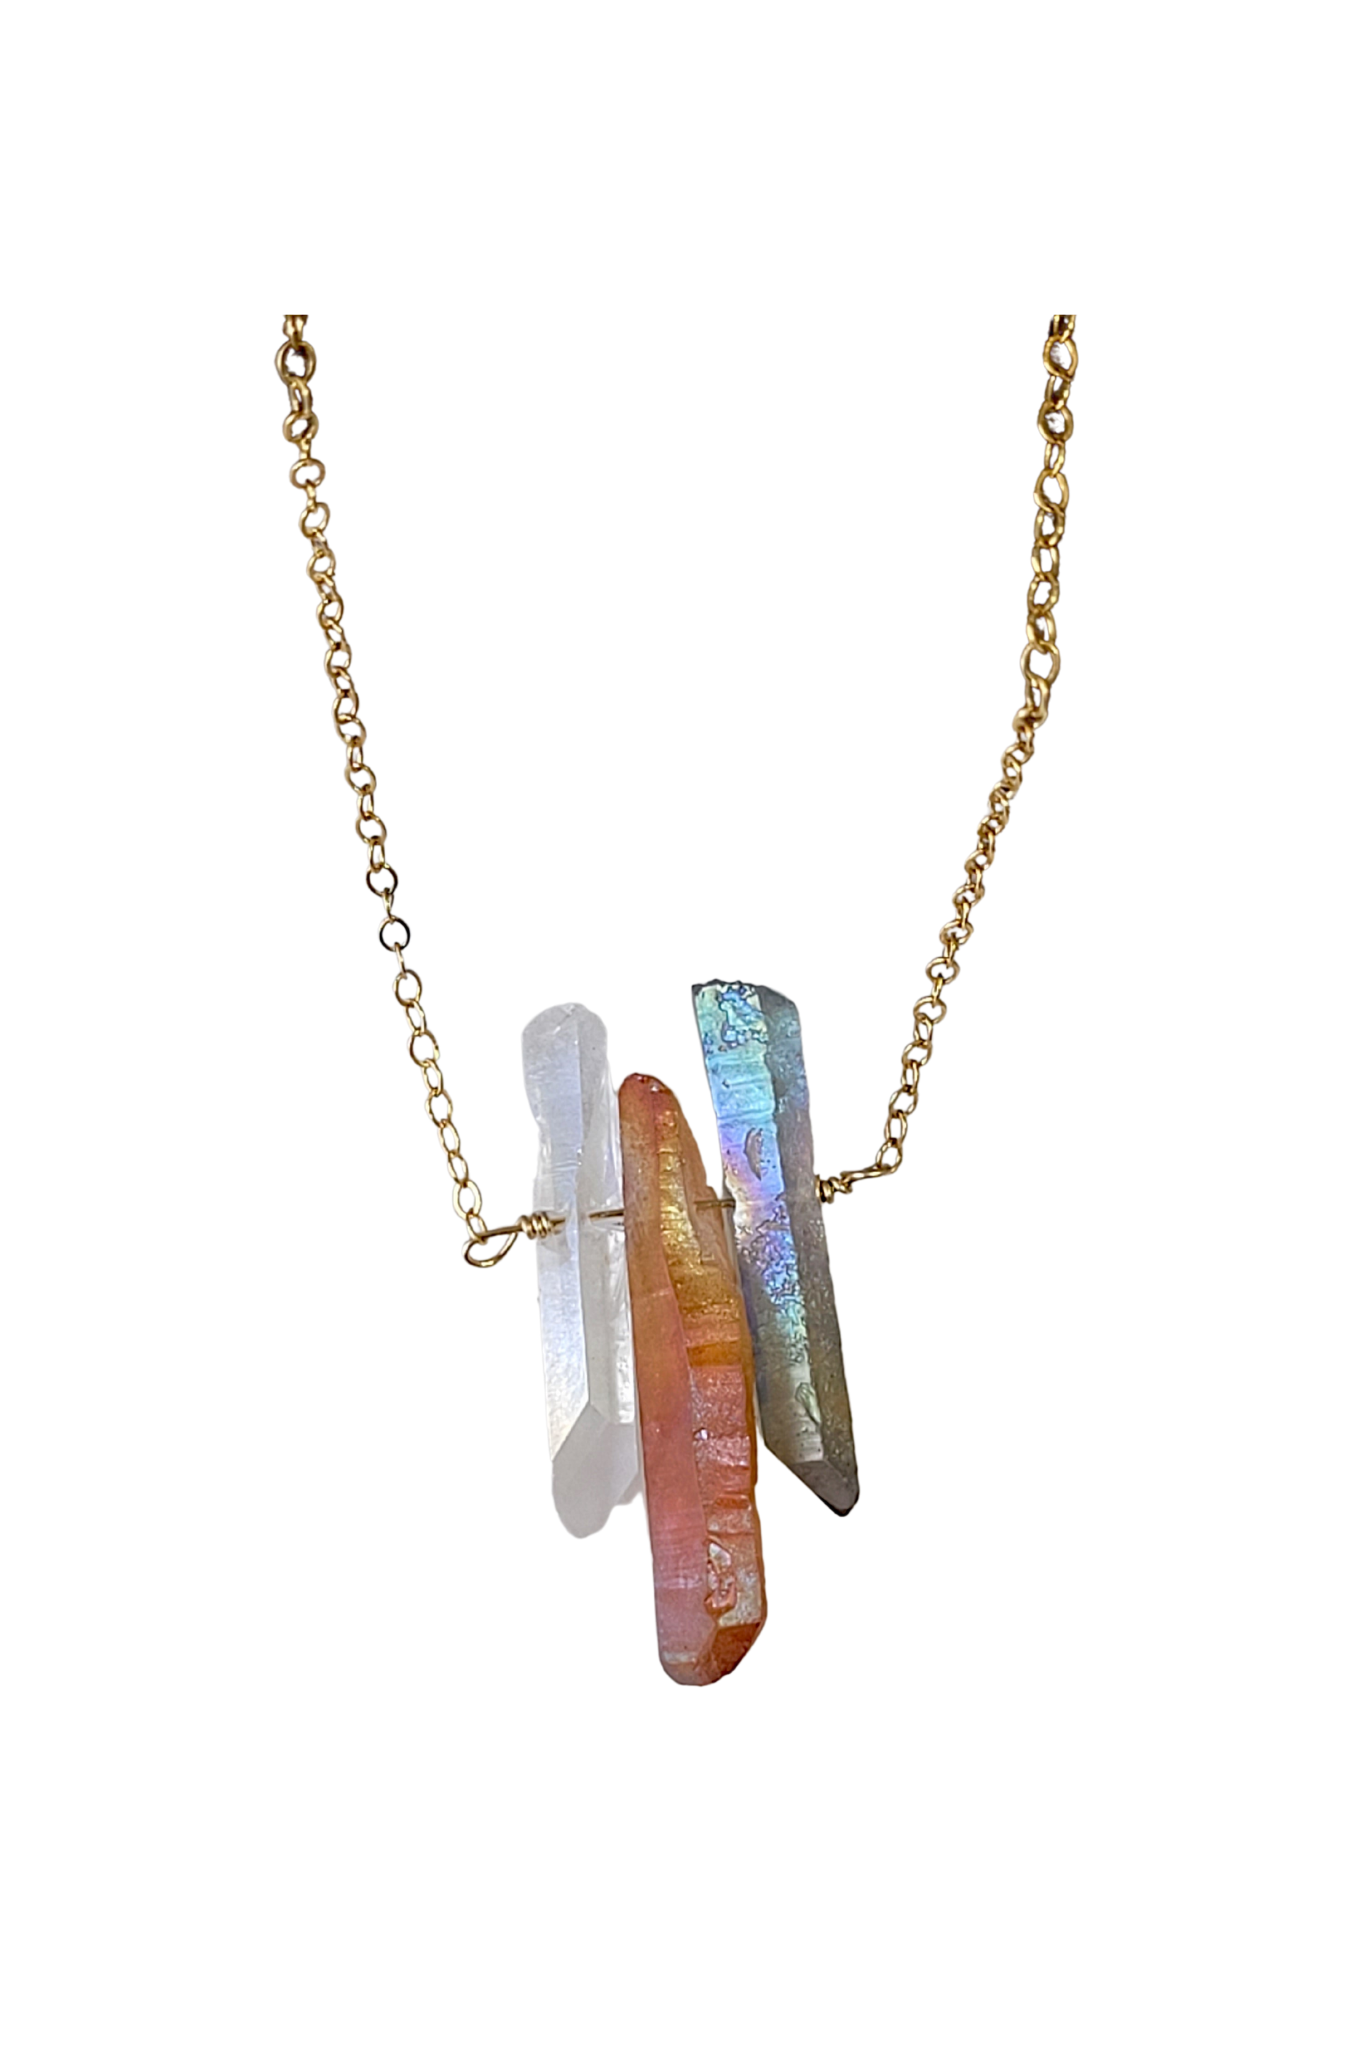 Three Raw Quartz Crystal Pendant Necklace with Mystic Grey, Rainbow and Peach Quartz in Gold